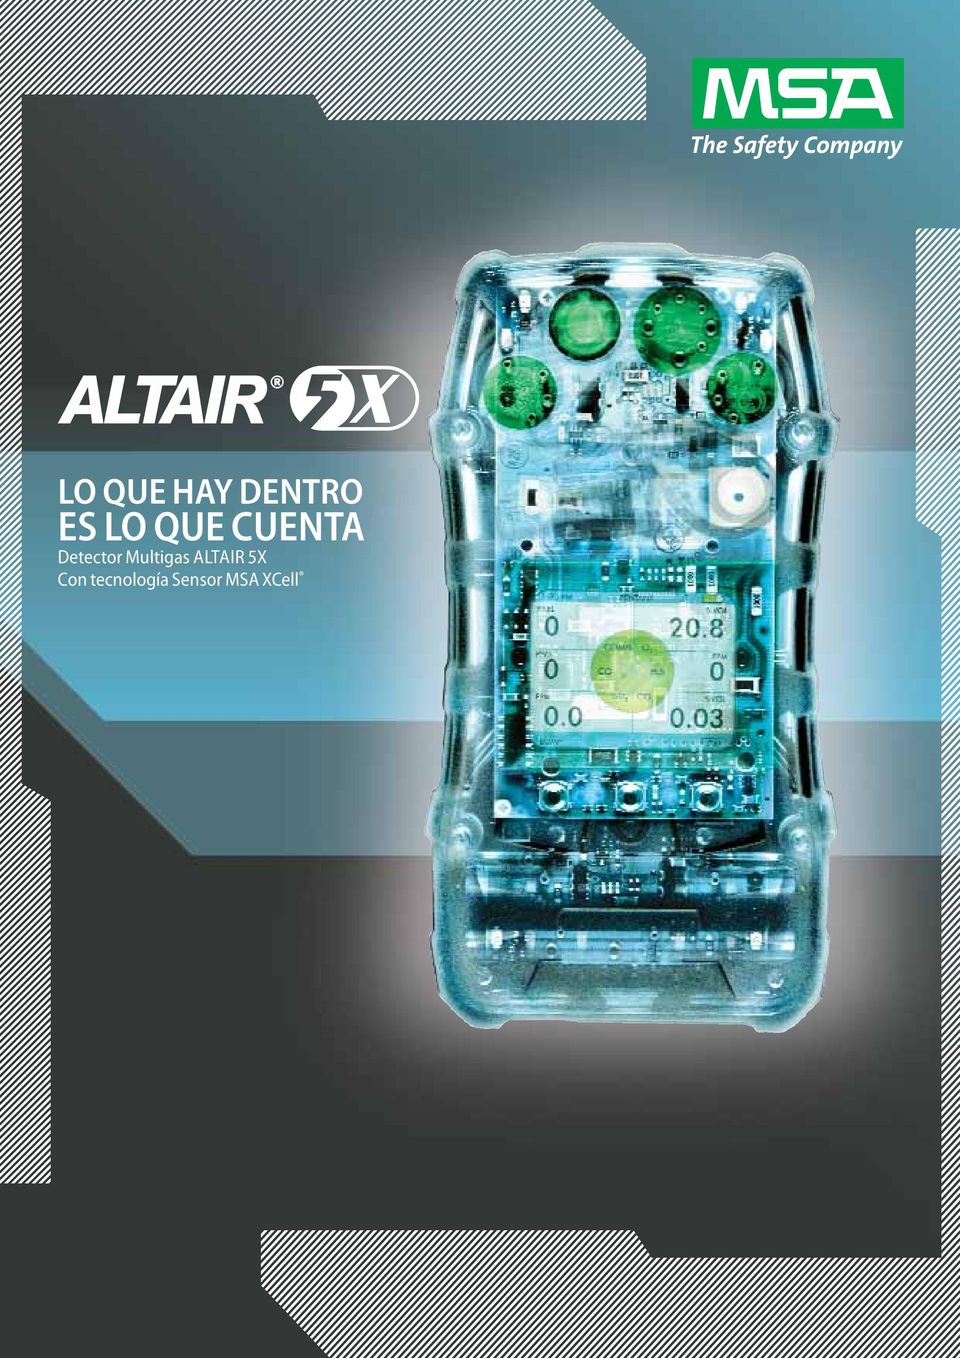 Multigas ALTAIR 5X Con